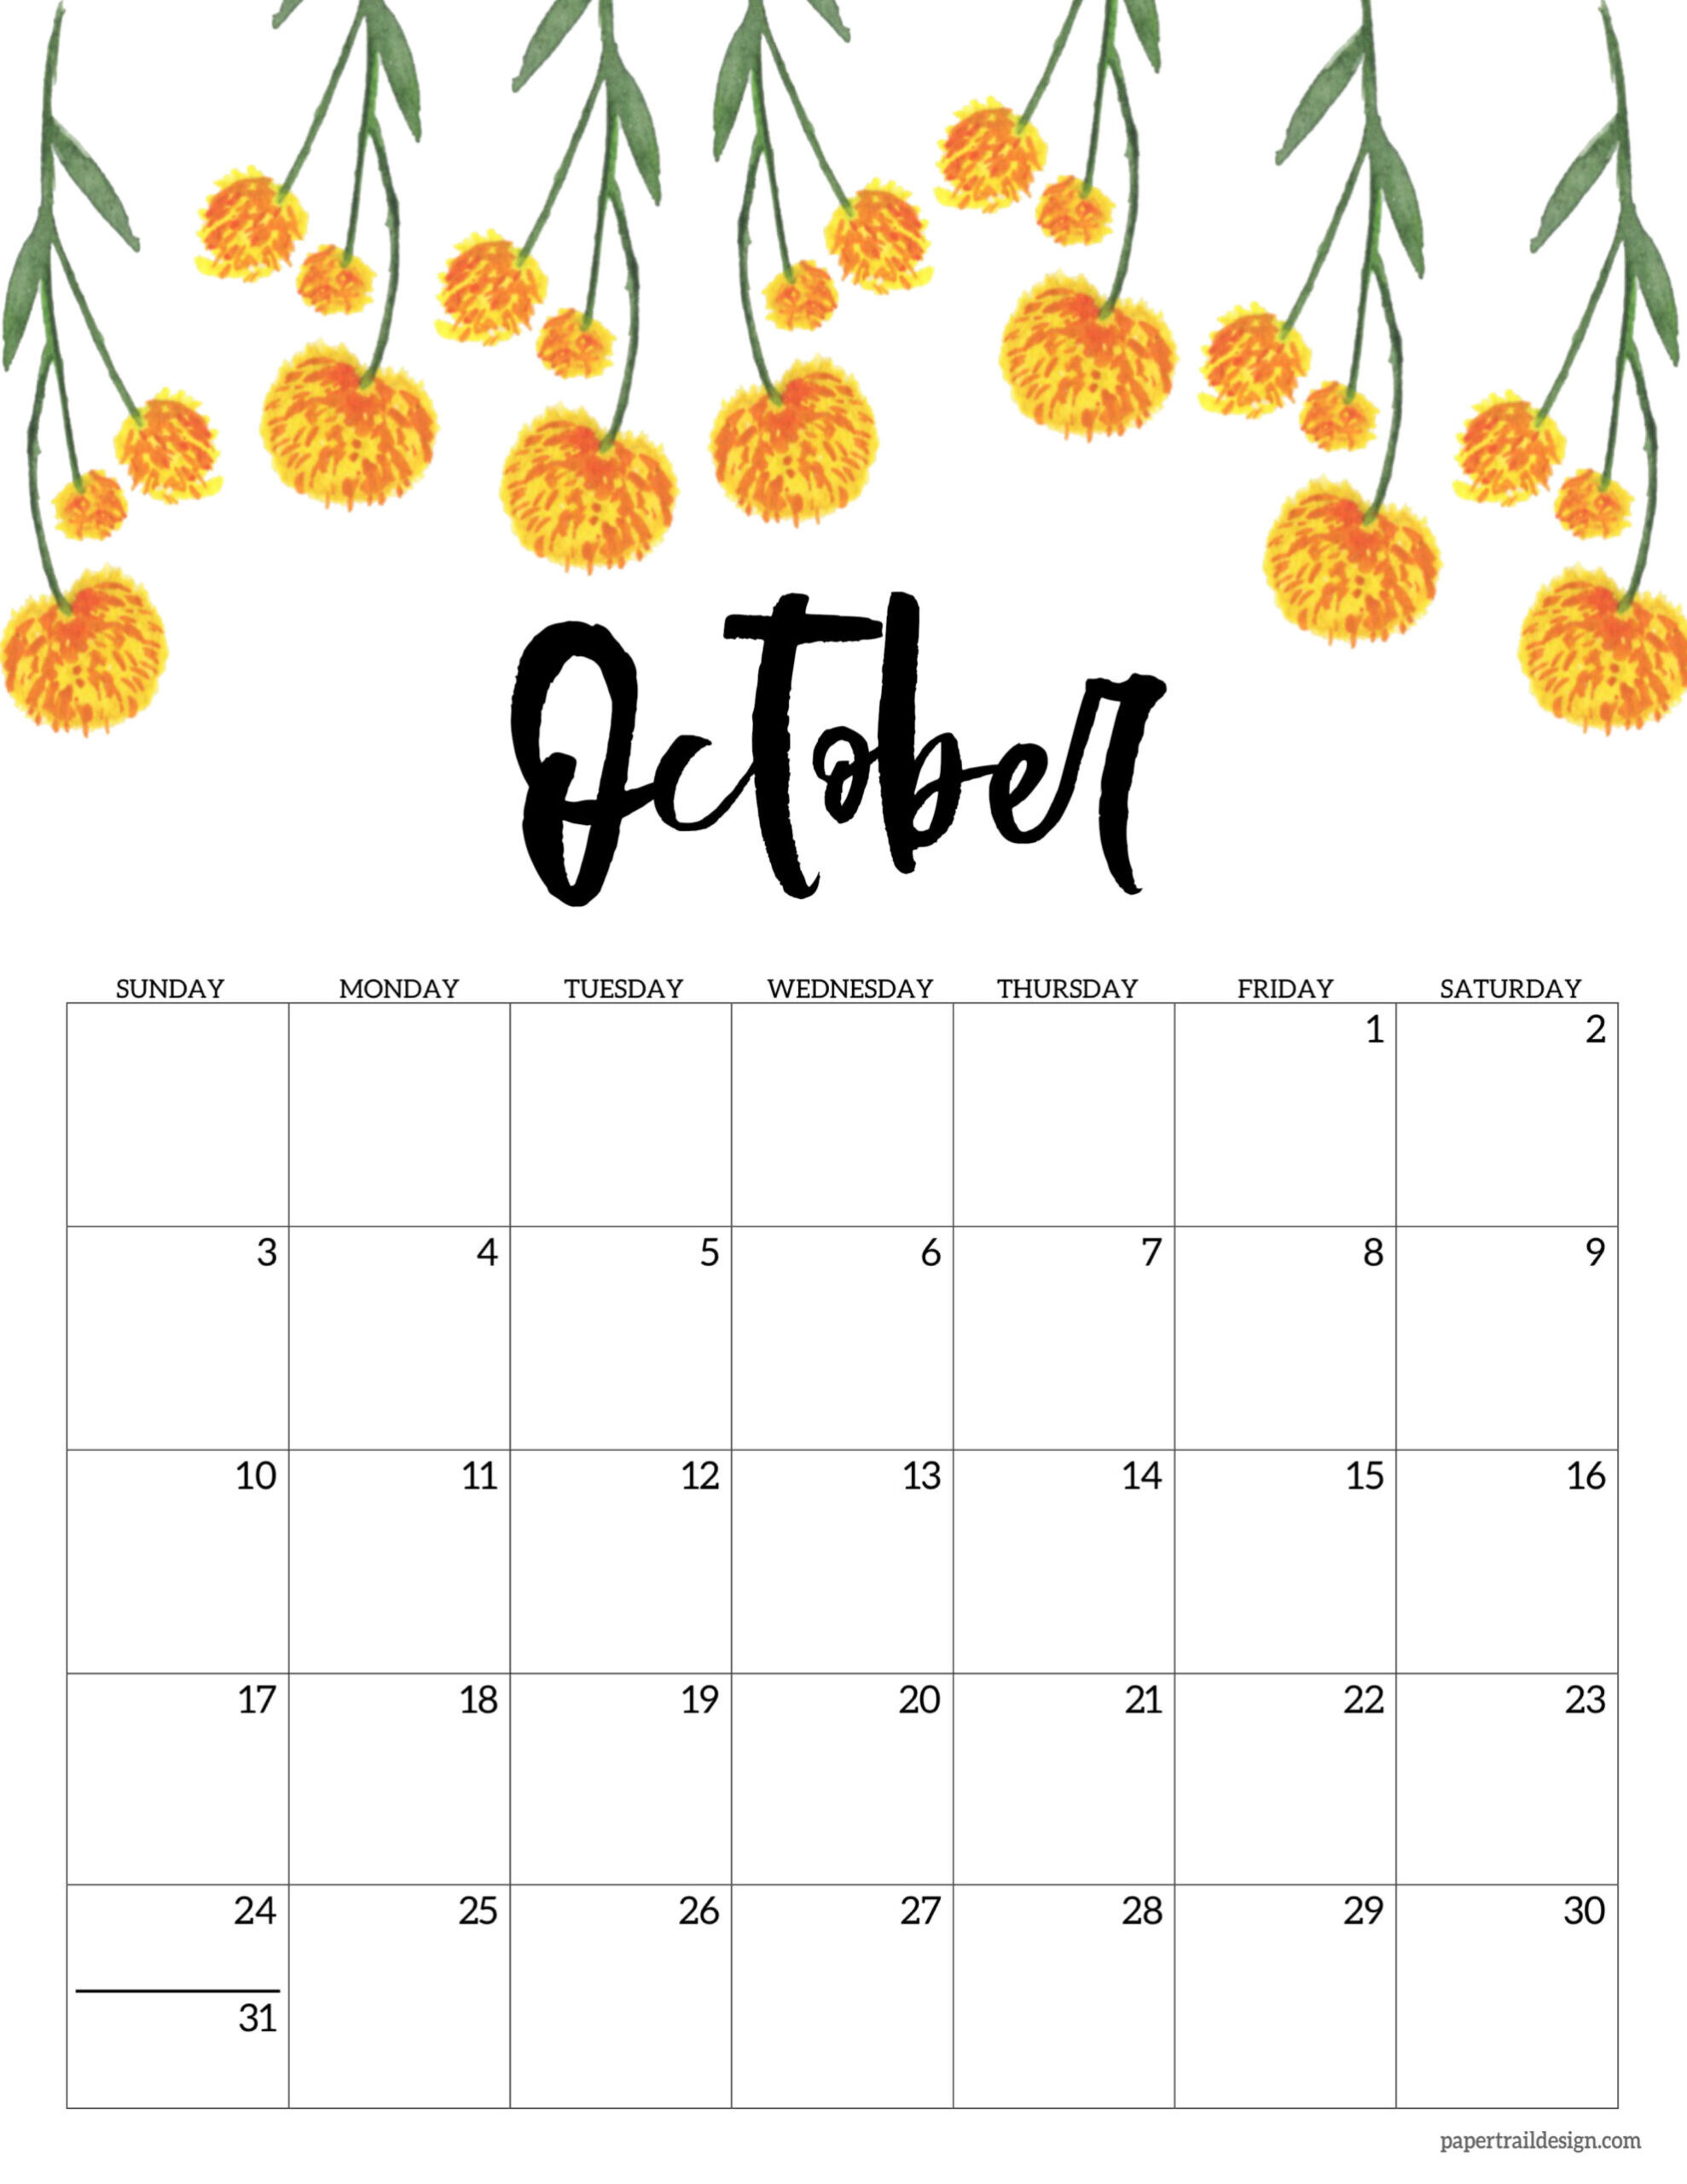 Free Printable 2021 Floral Calendar - Paper Trail Design-Full Size Feb 2021 Calendar To Print Free